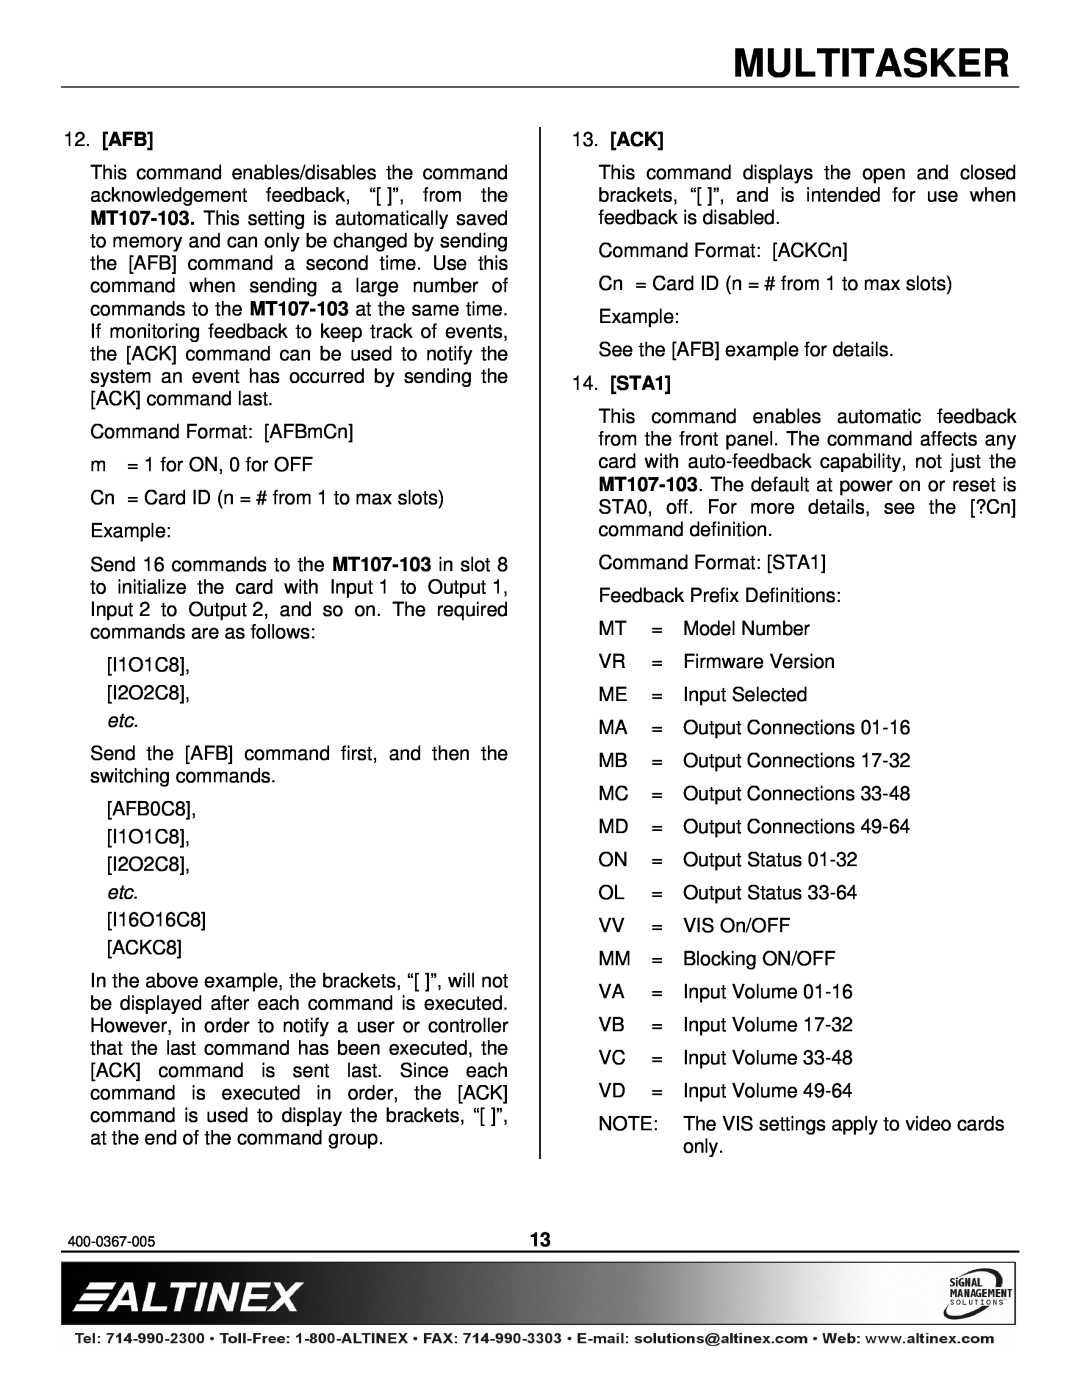 Altinex MT107-103 manual Afb, Ack, STA1, Multitasker 